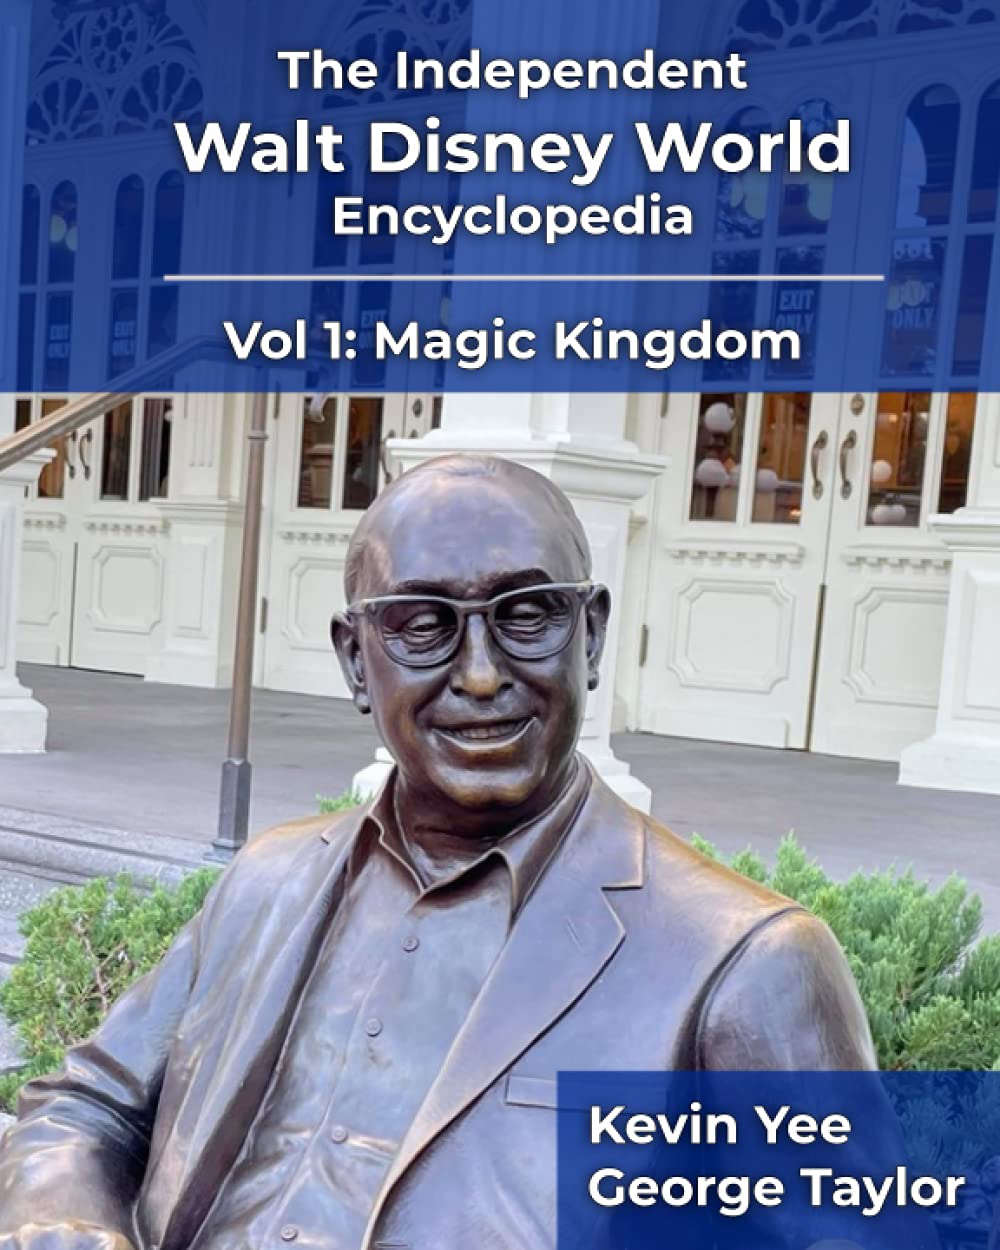 The Independent Walt Disney World Encyclopedia Vol 1: Magic Kingdom